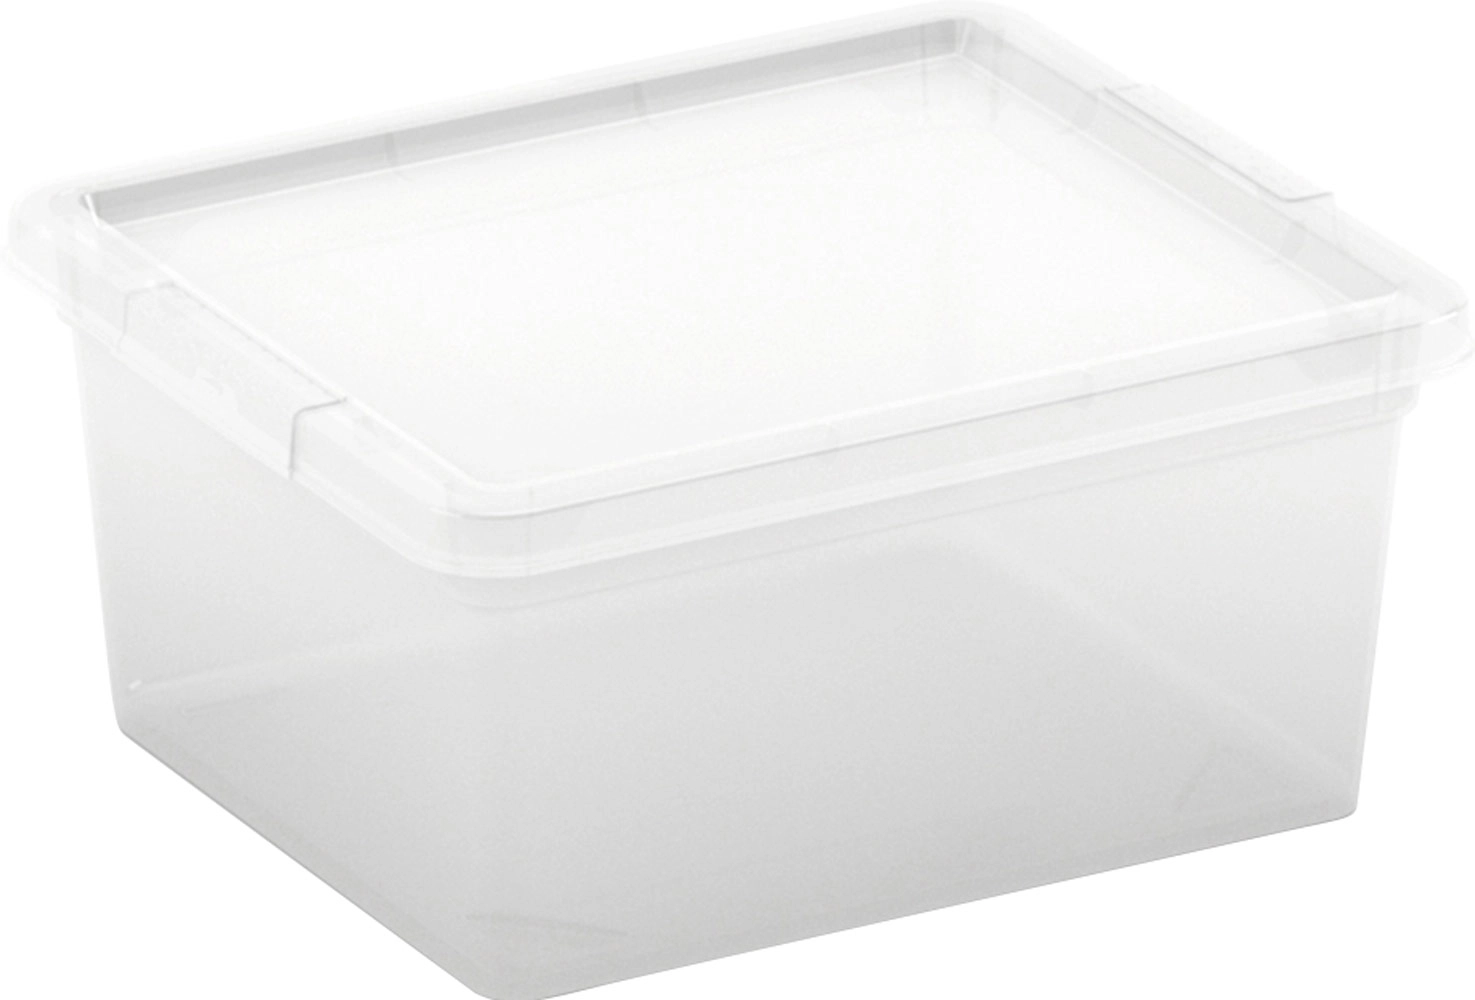 Iris Schuhbox 16 l stapelbar Weiß-Transparent kaufen bei OBI